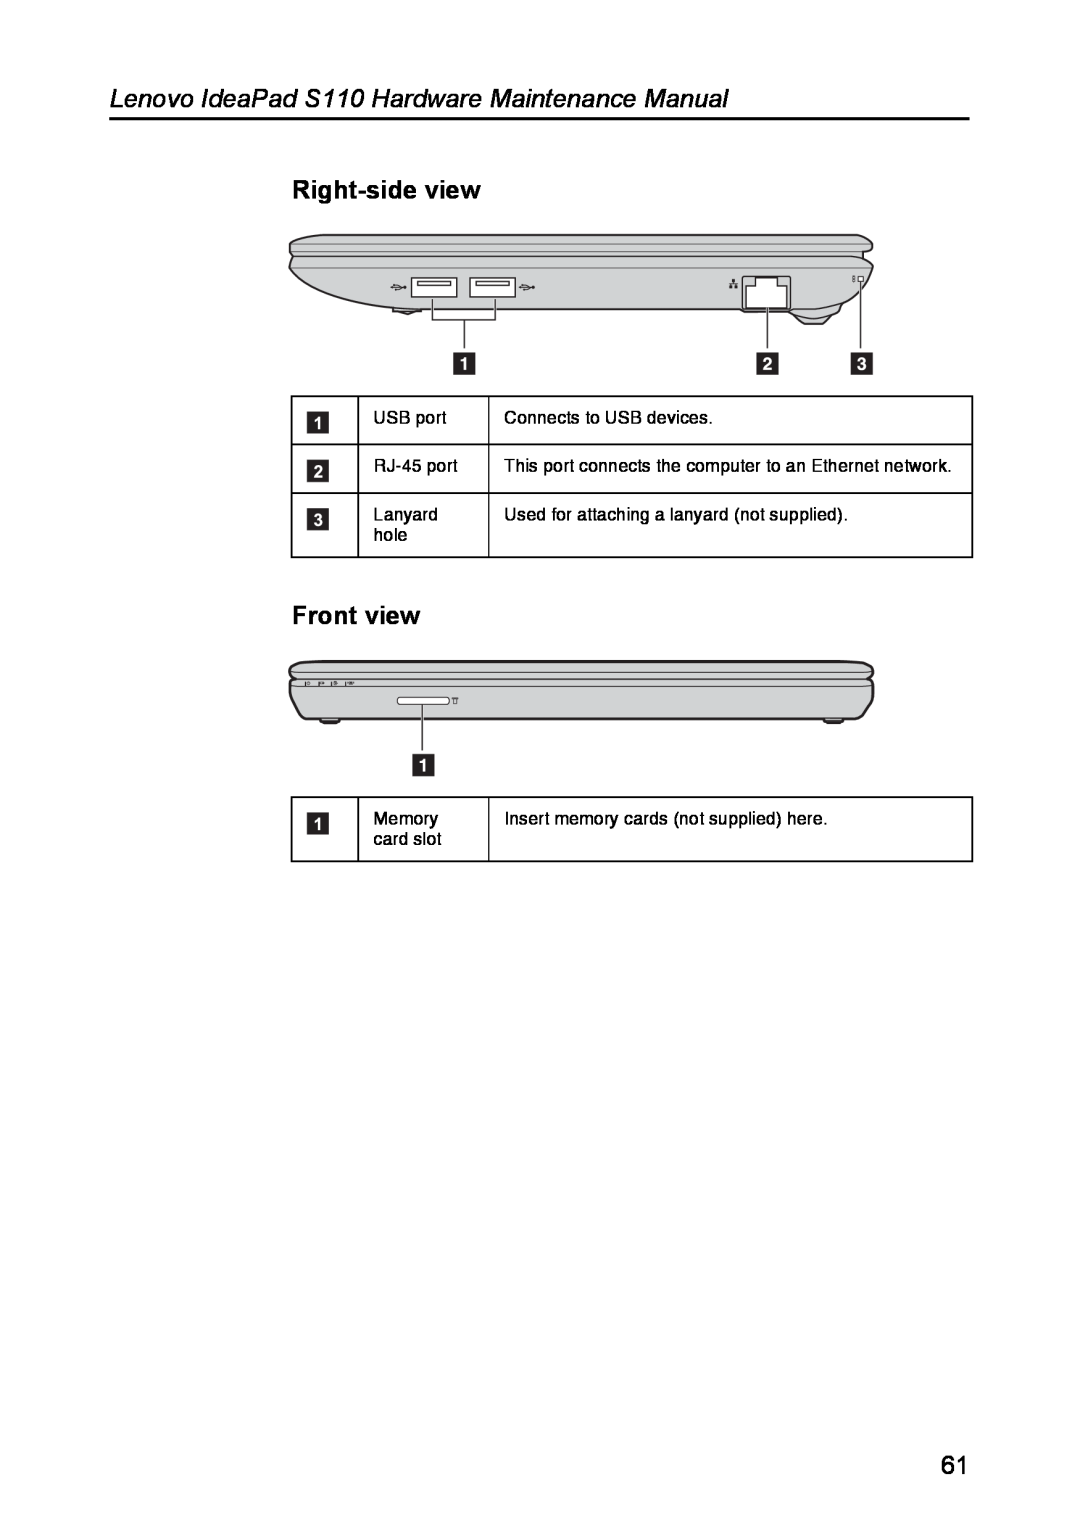 Lenovo manual Right-side view, Front view, Lenovo IdeaPad S110 Hardware Maintenance Manual 